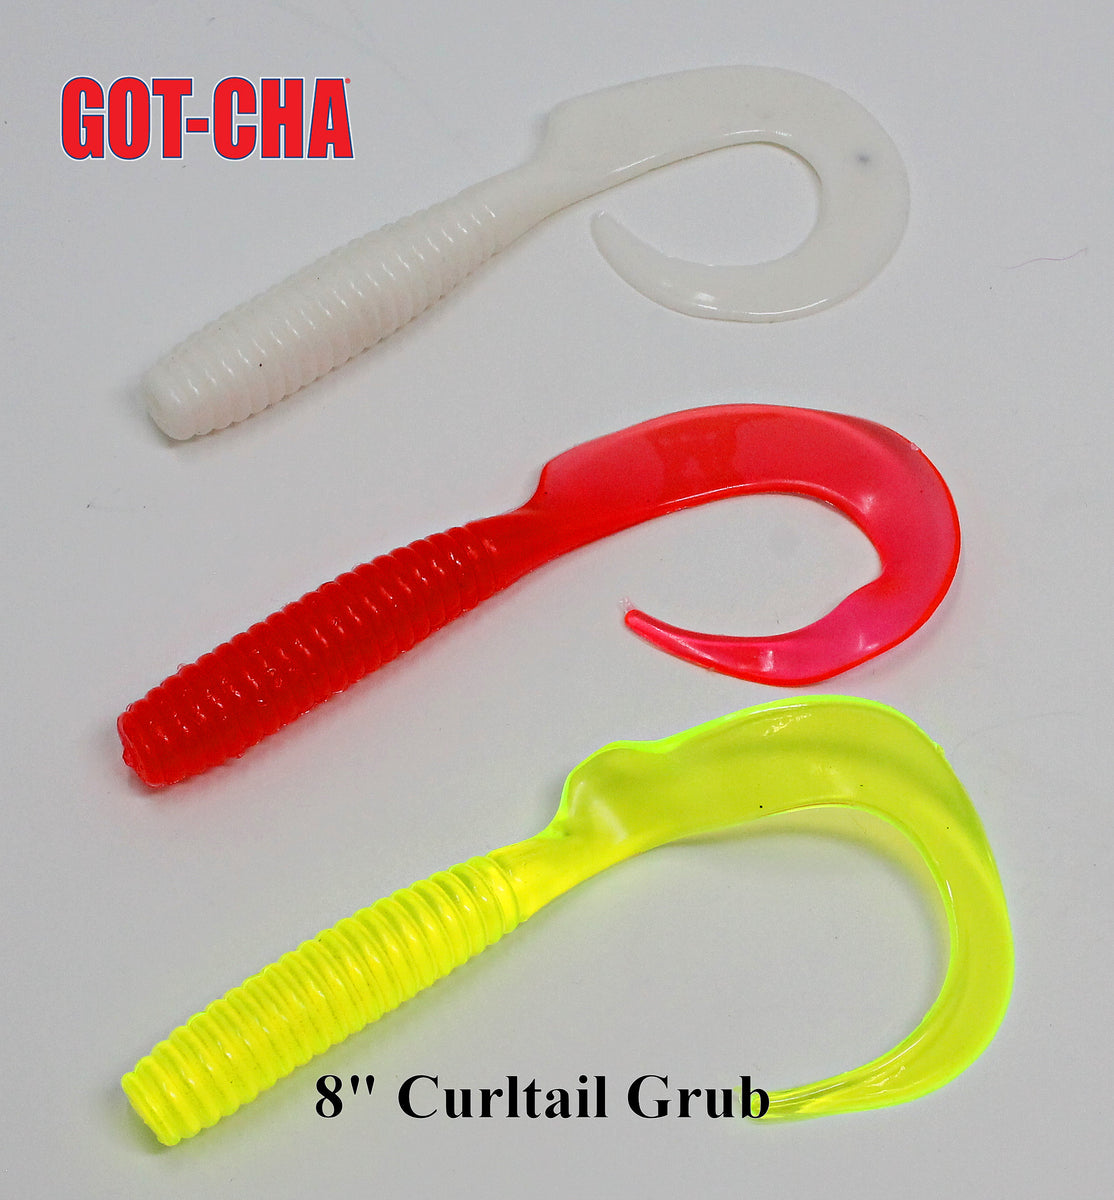 Got-Cha Curltail Grub 6 20 pack Nite Glow